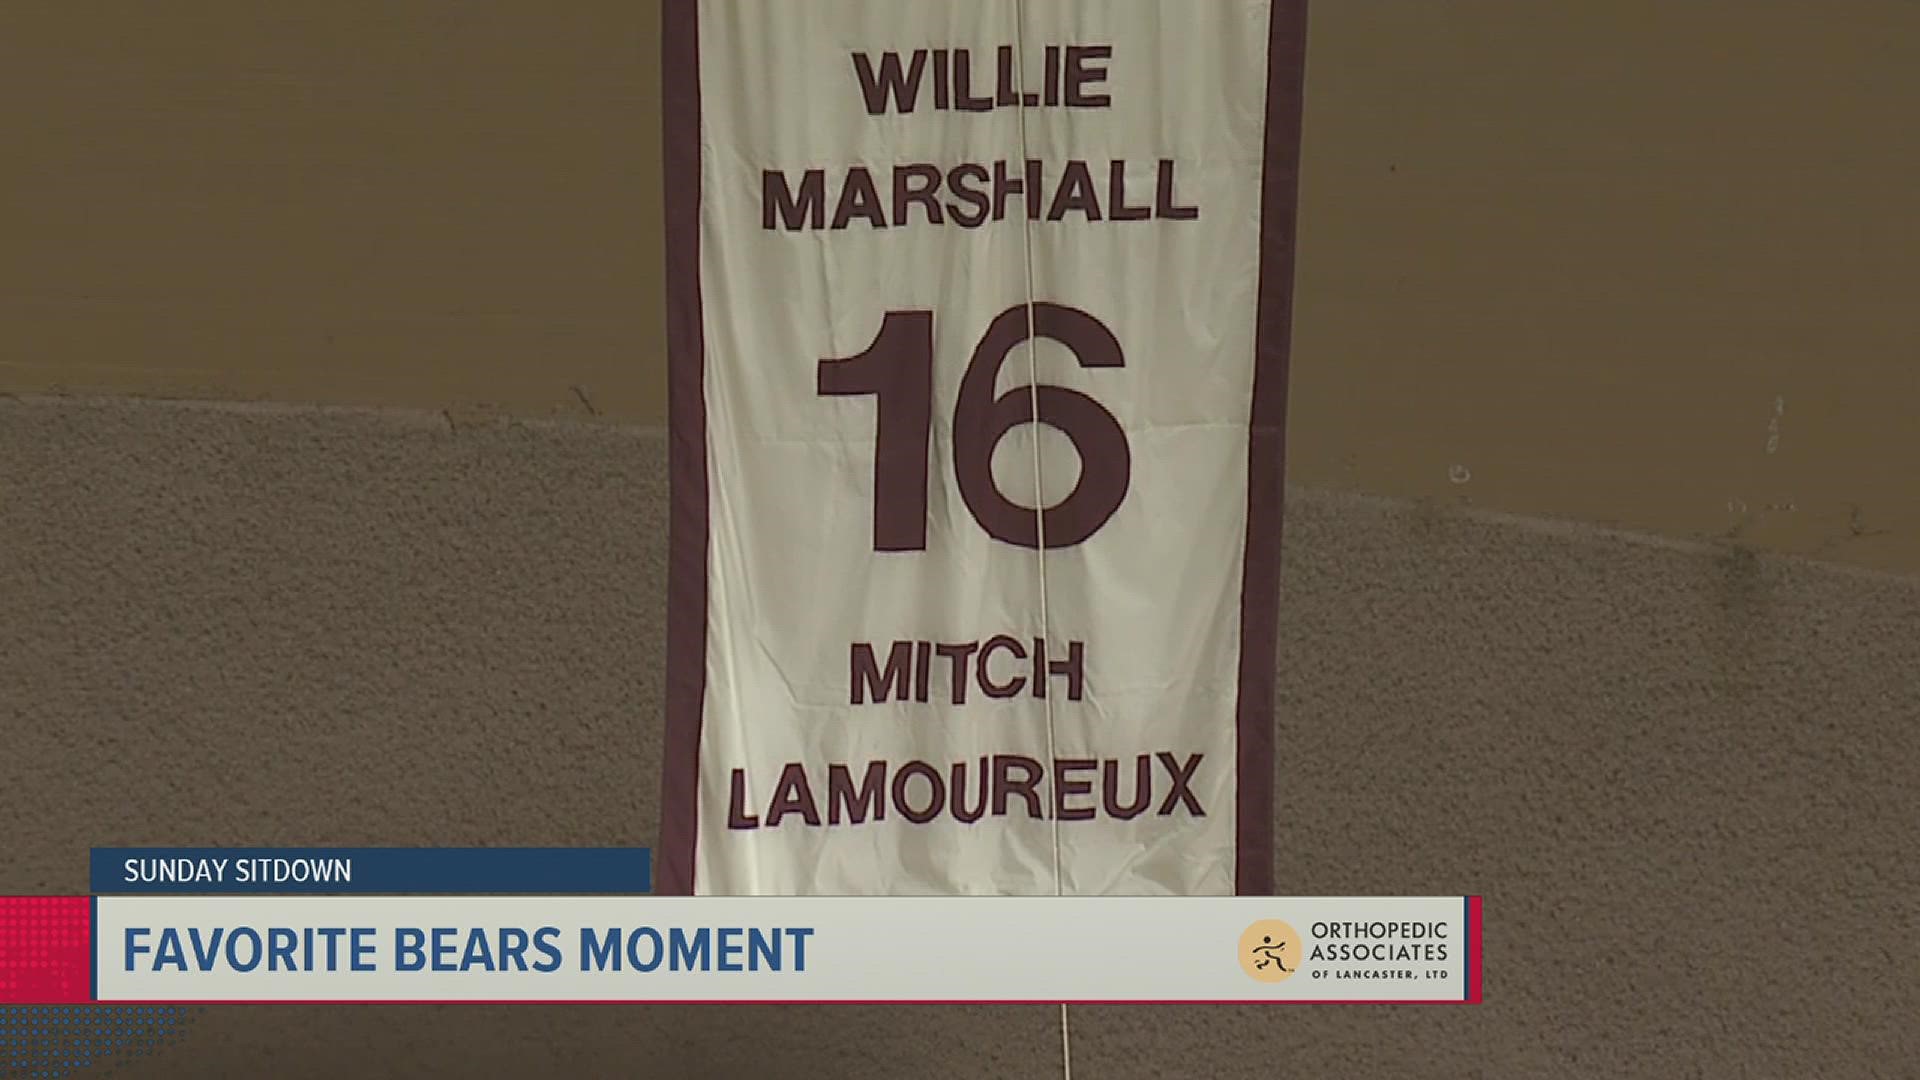 AHL & Bears Hall of Famer says Hershey molded his career.